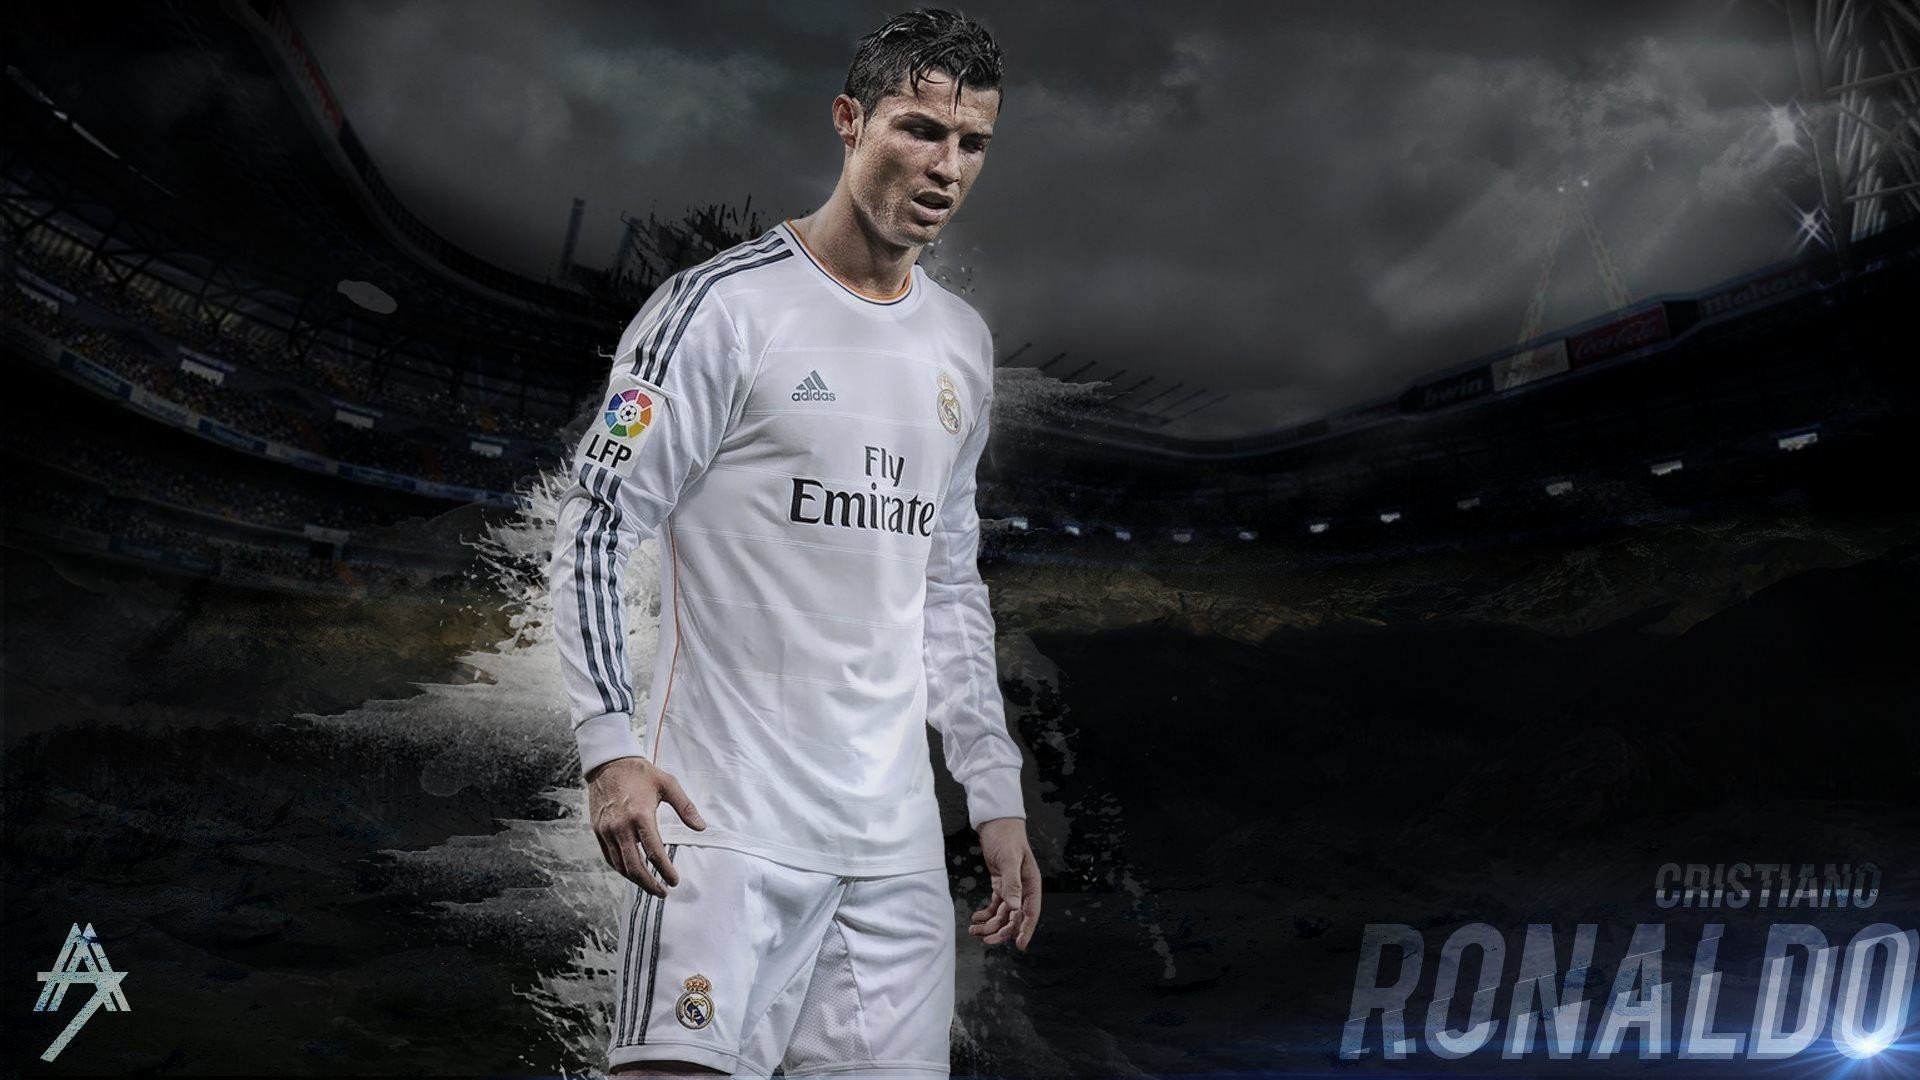 1920x1080 Download Cristiano Ronaldo Images